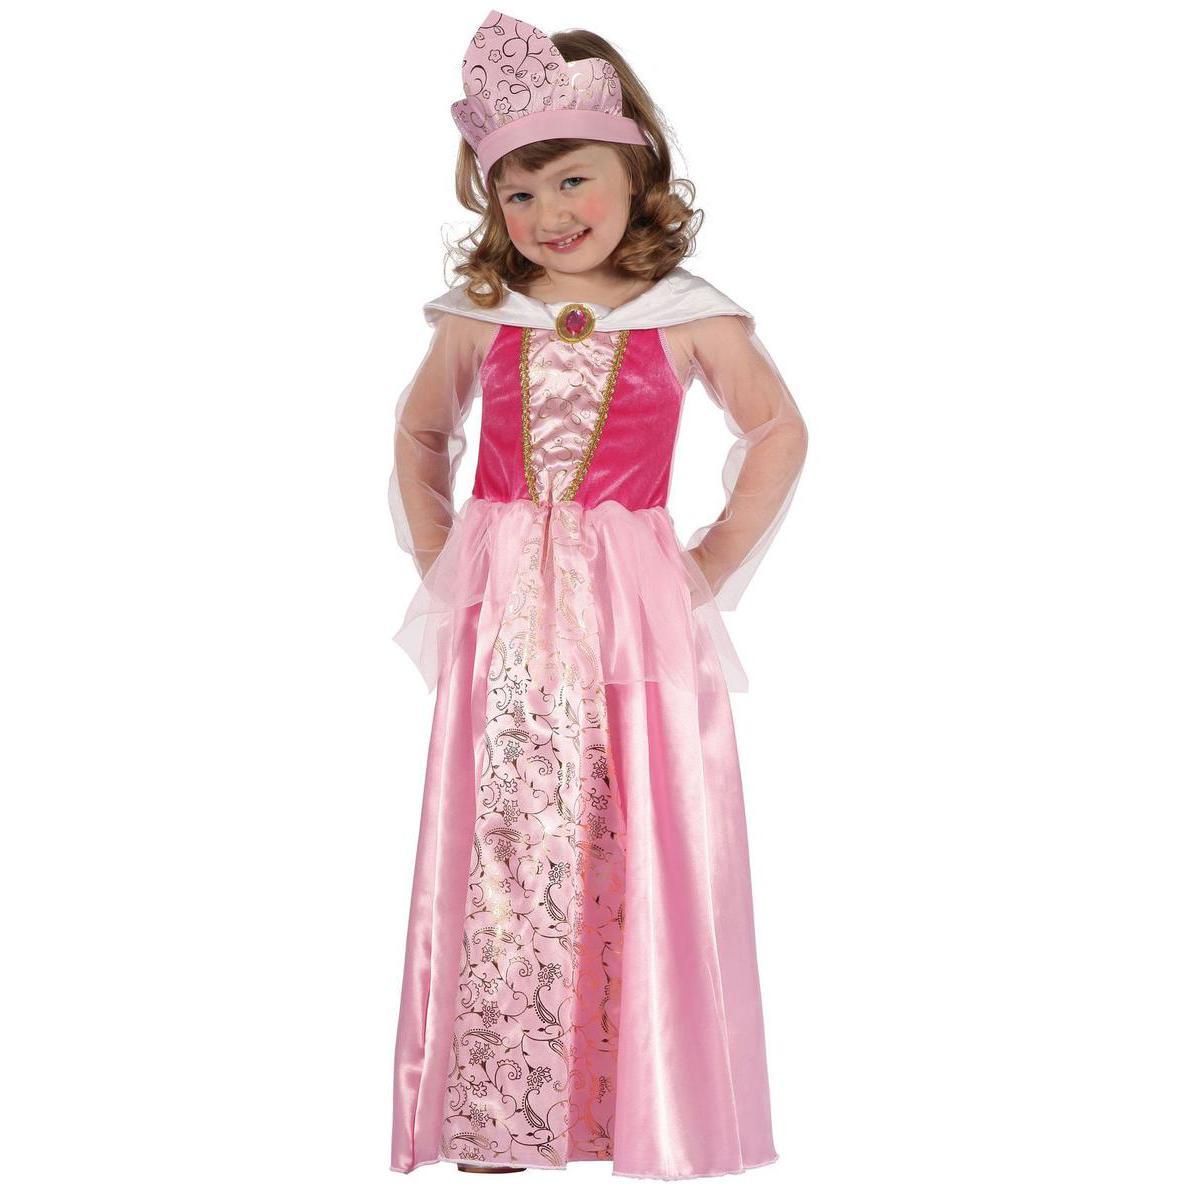 Costume de Baby Princesse en polyester - 92 x 104 cm - Rose